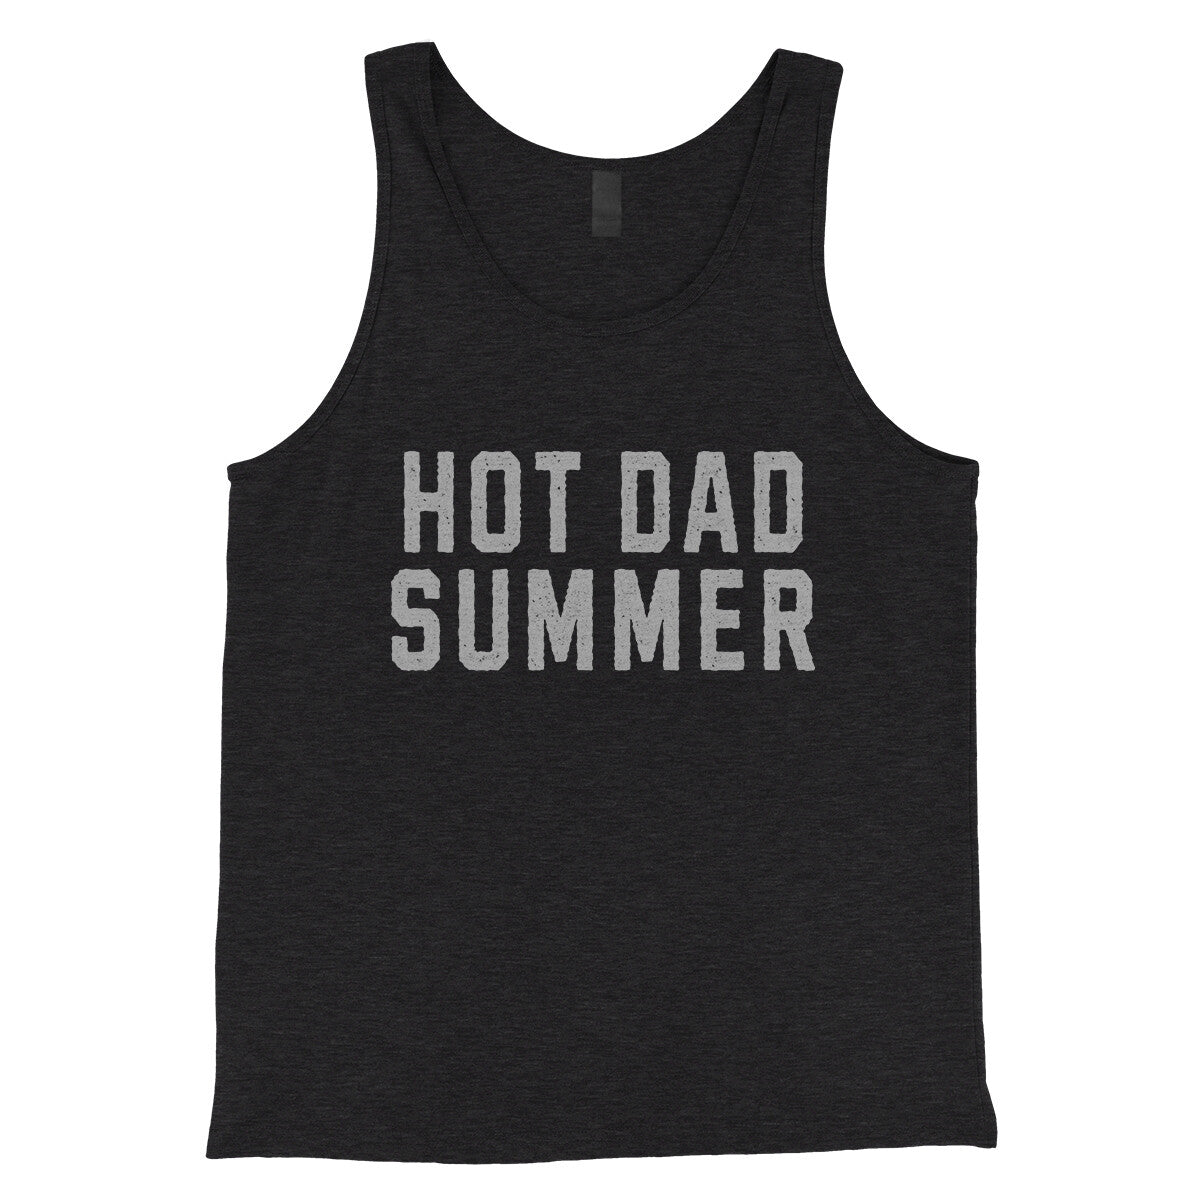 Hot Dad Summer in Charcoal Black TriBlend Color